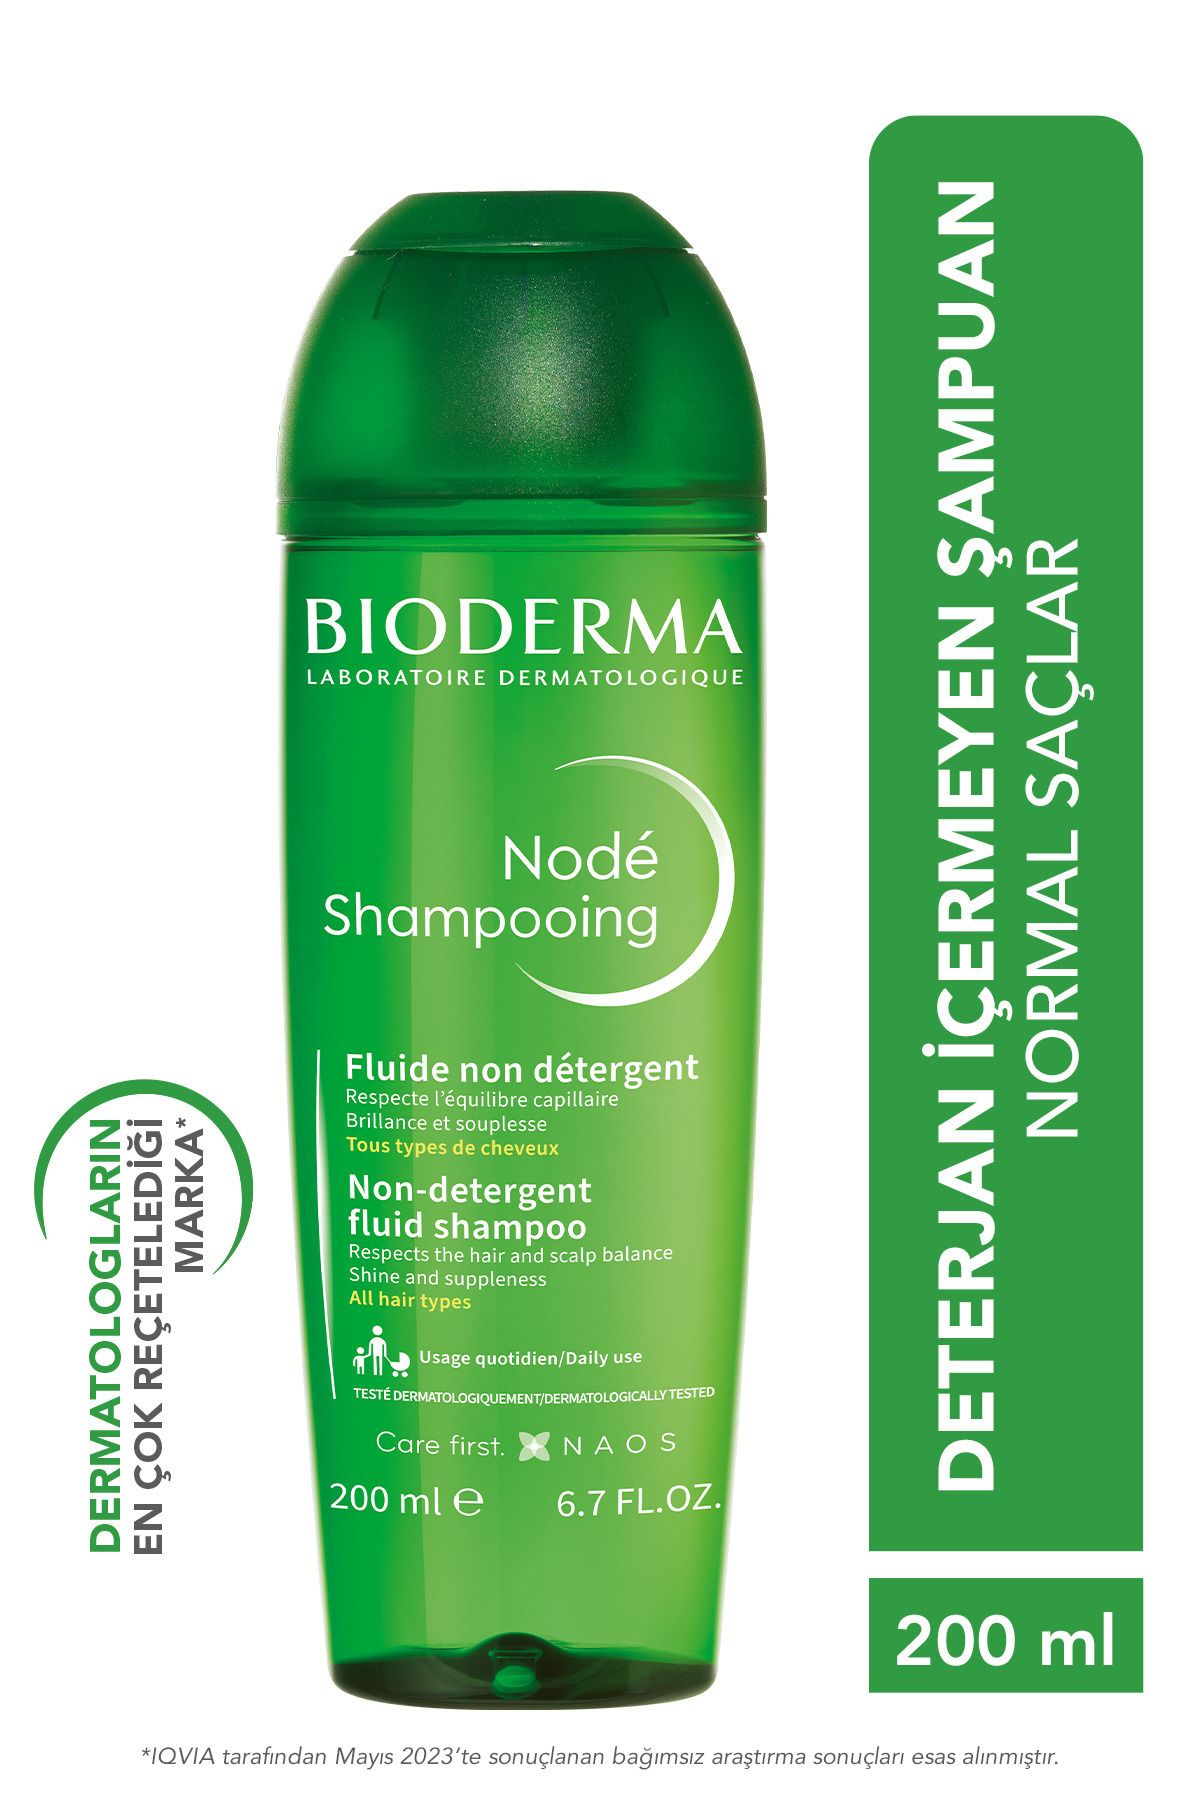 Bioderma Perfect Hair - Node Fluid Shampoo Detergent-Free Hair Care Shampoo 200 ml PSSN963